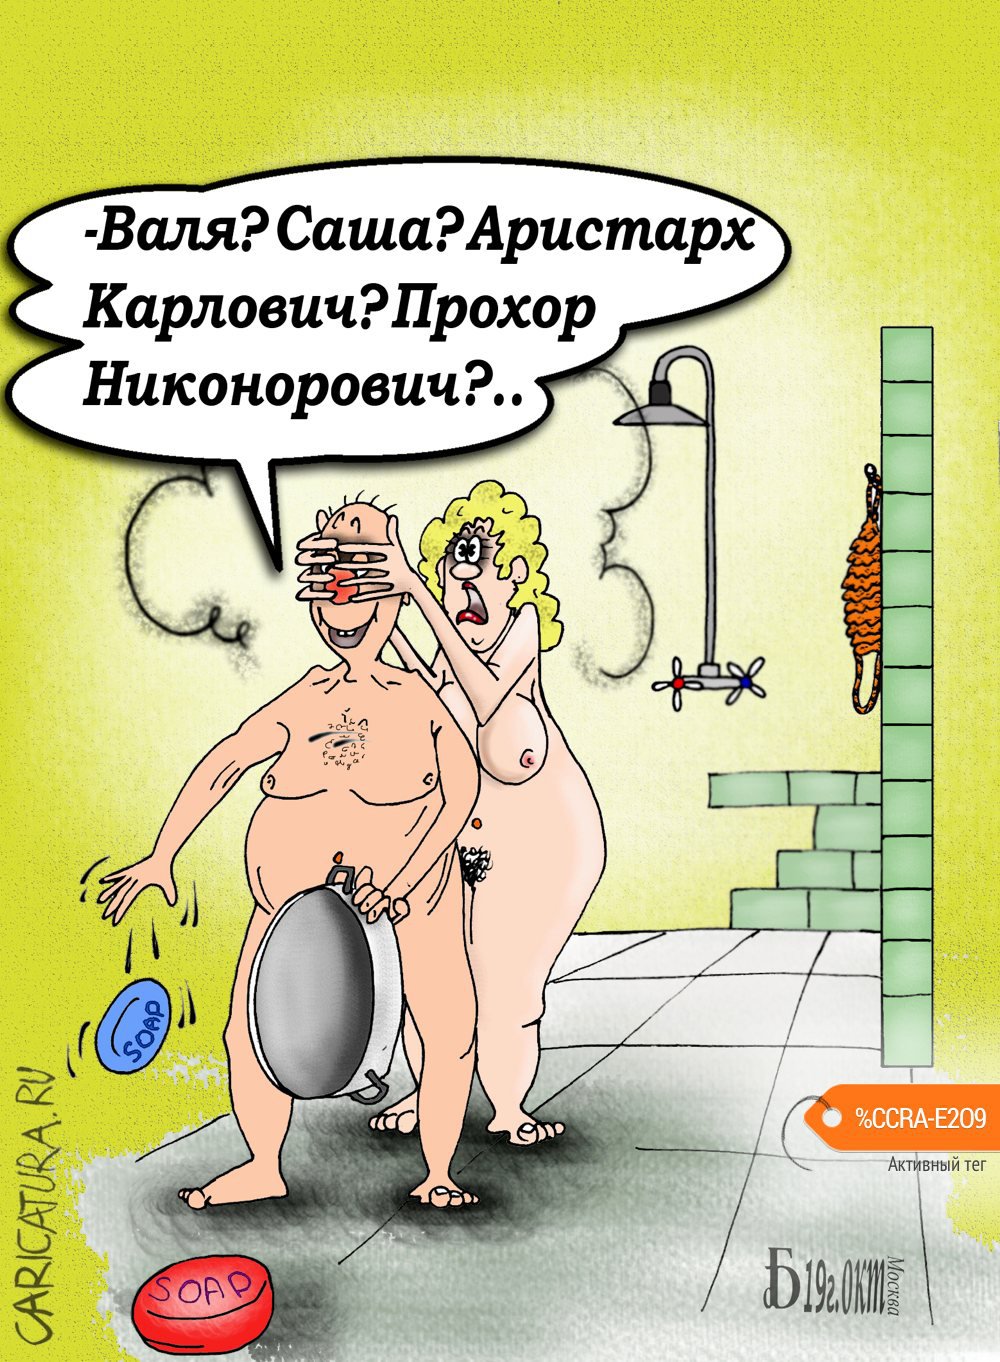 Карикатура "Про мыльную историю", Борис Демин